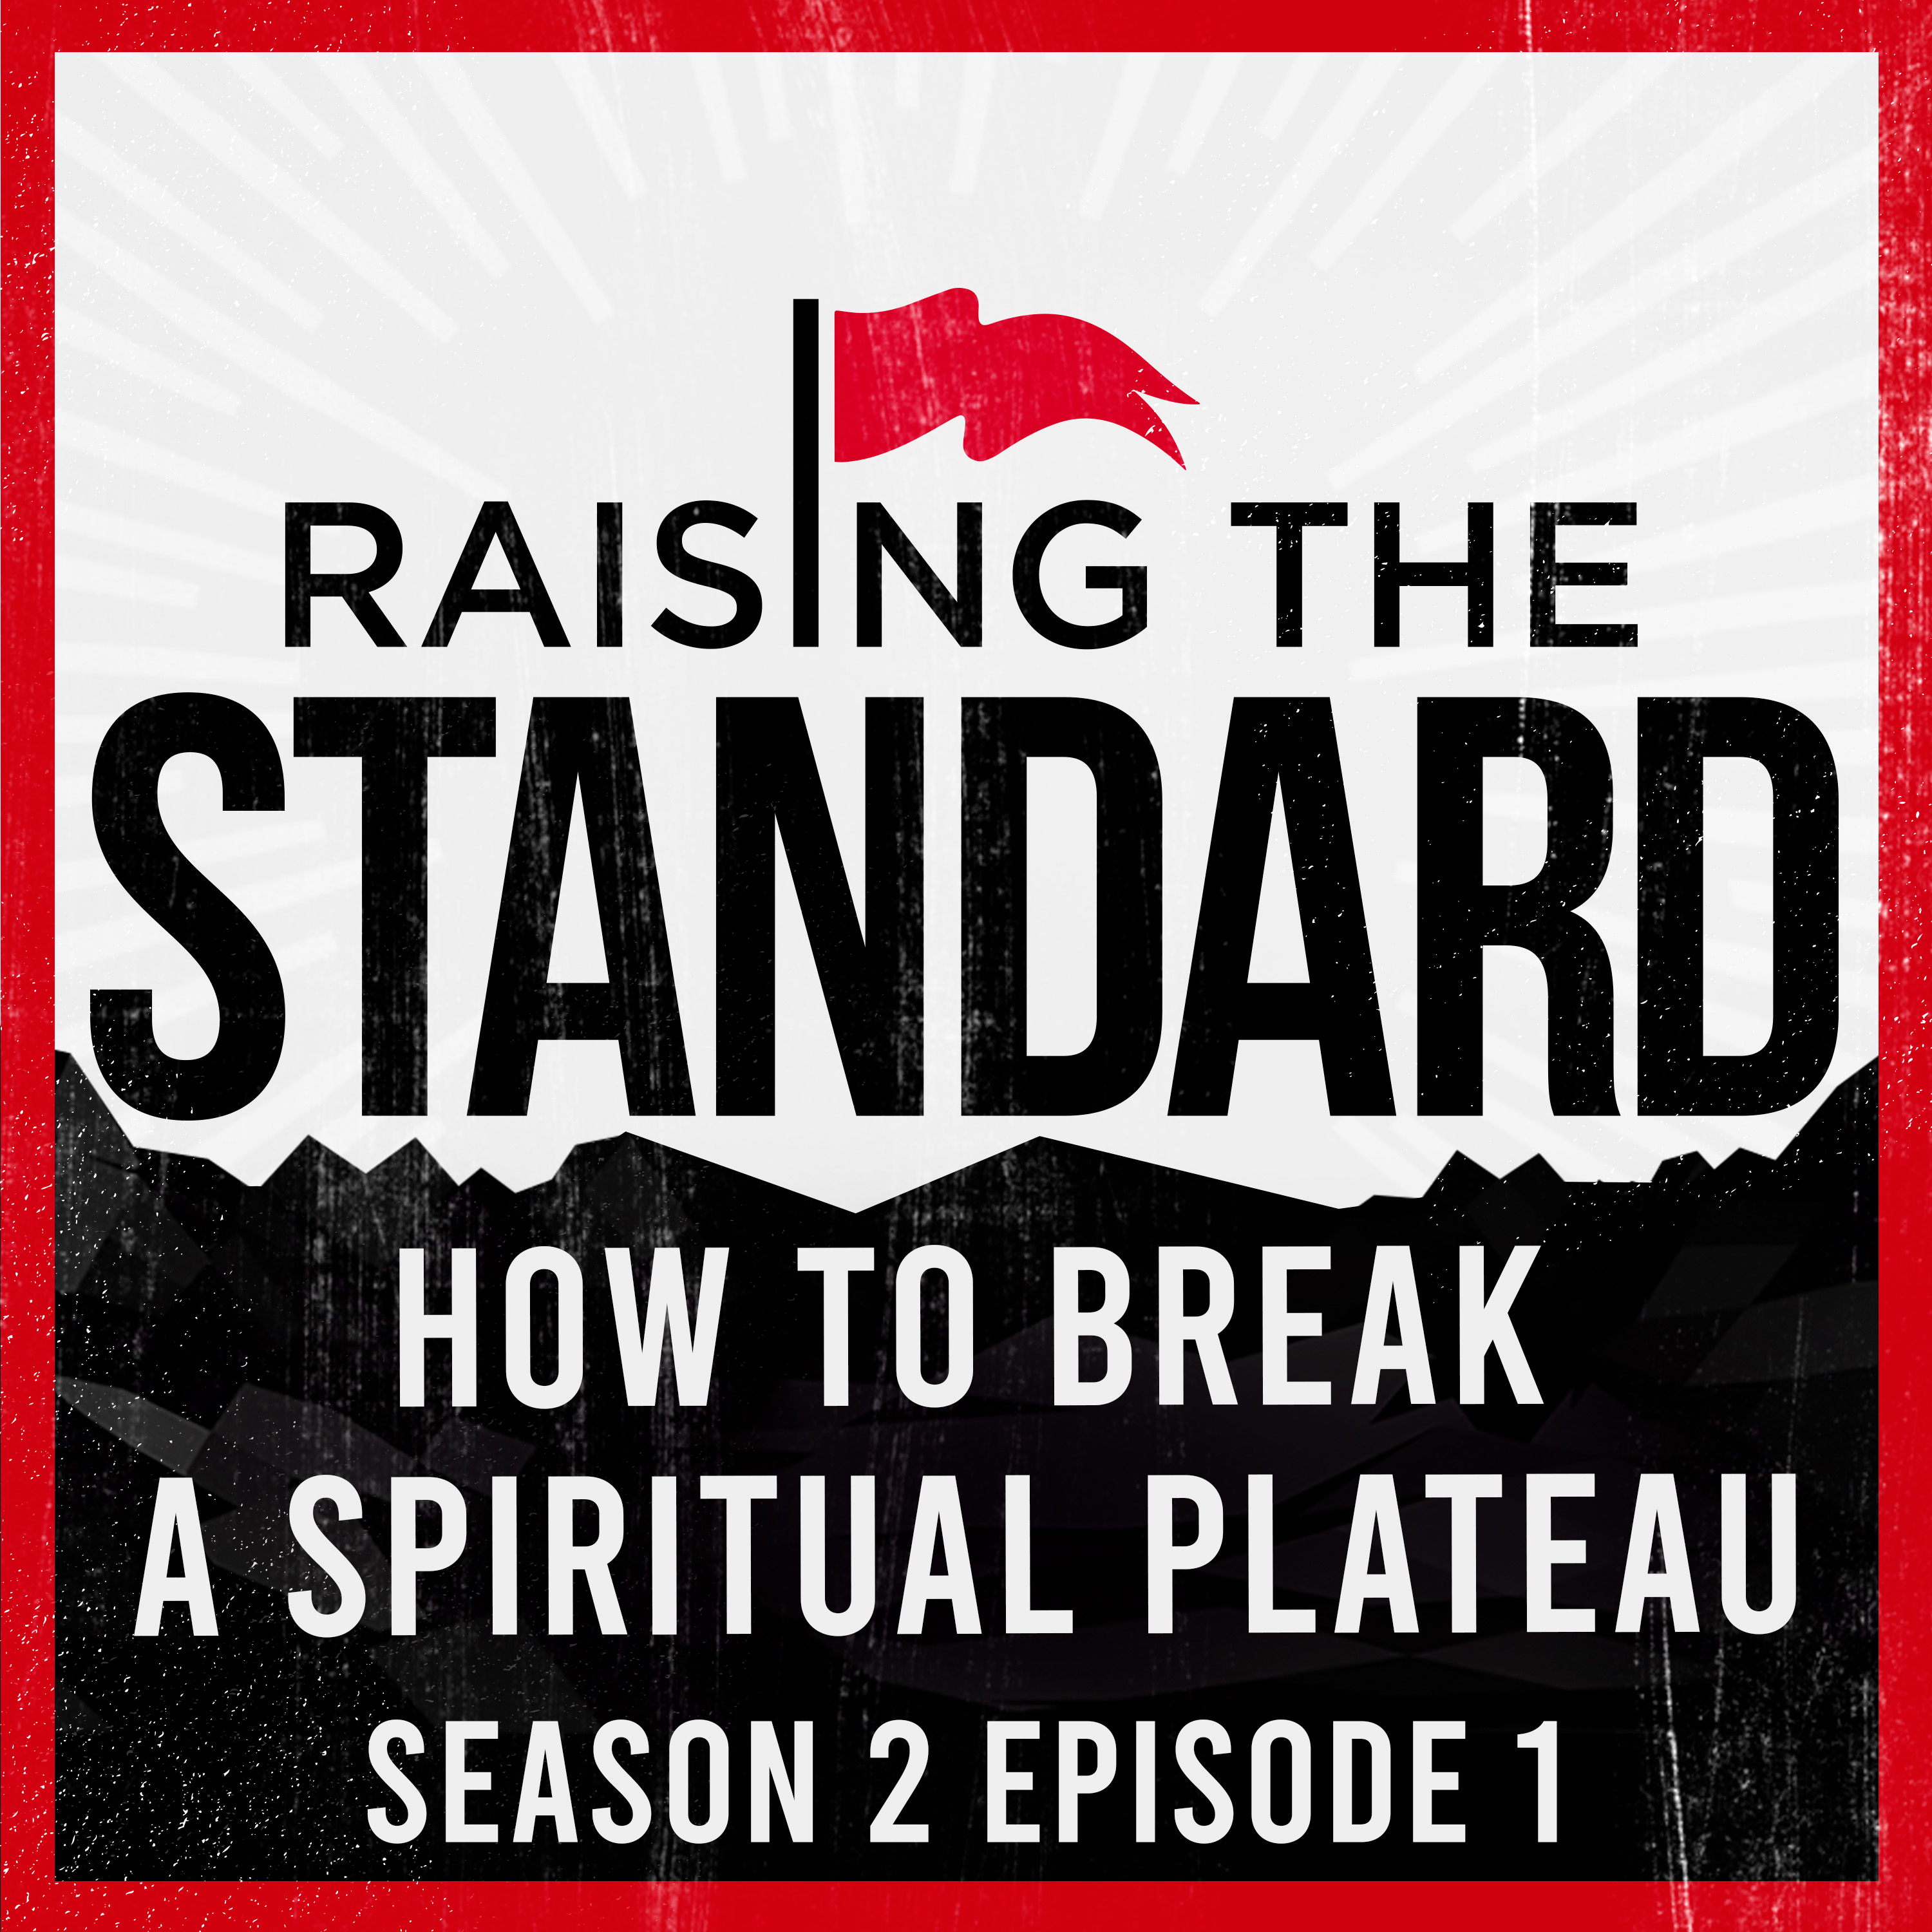 How to Break a Spiritual Plateau